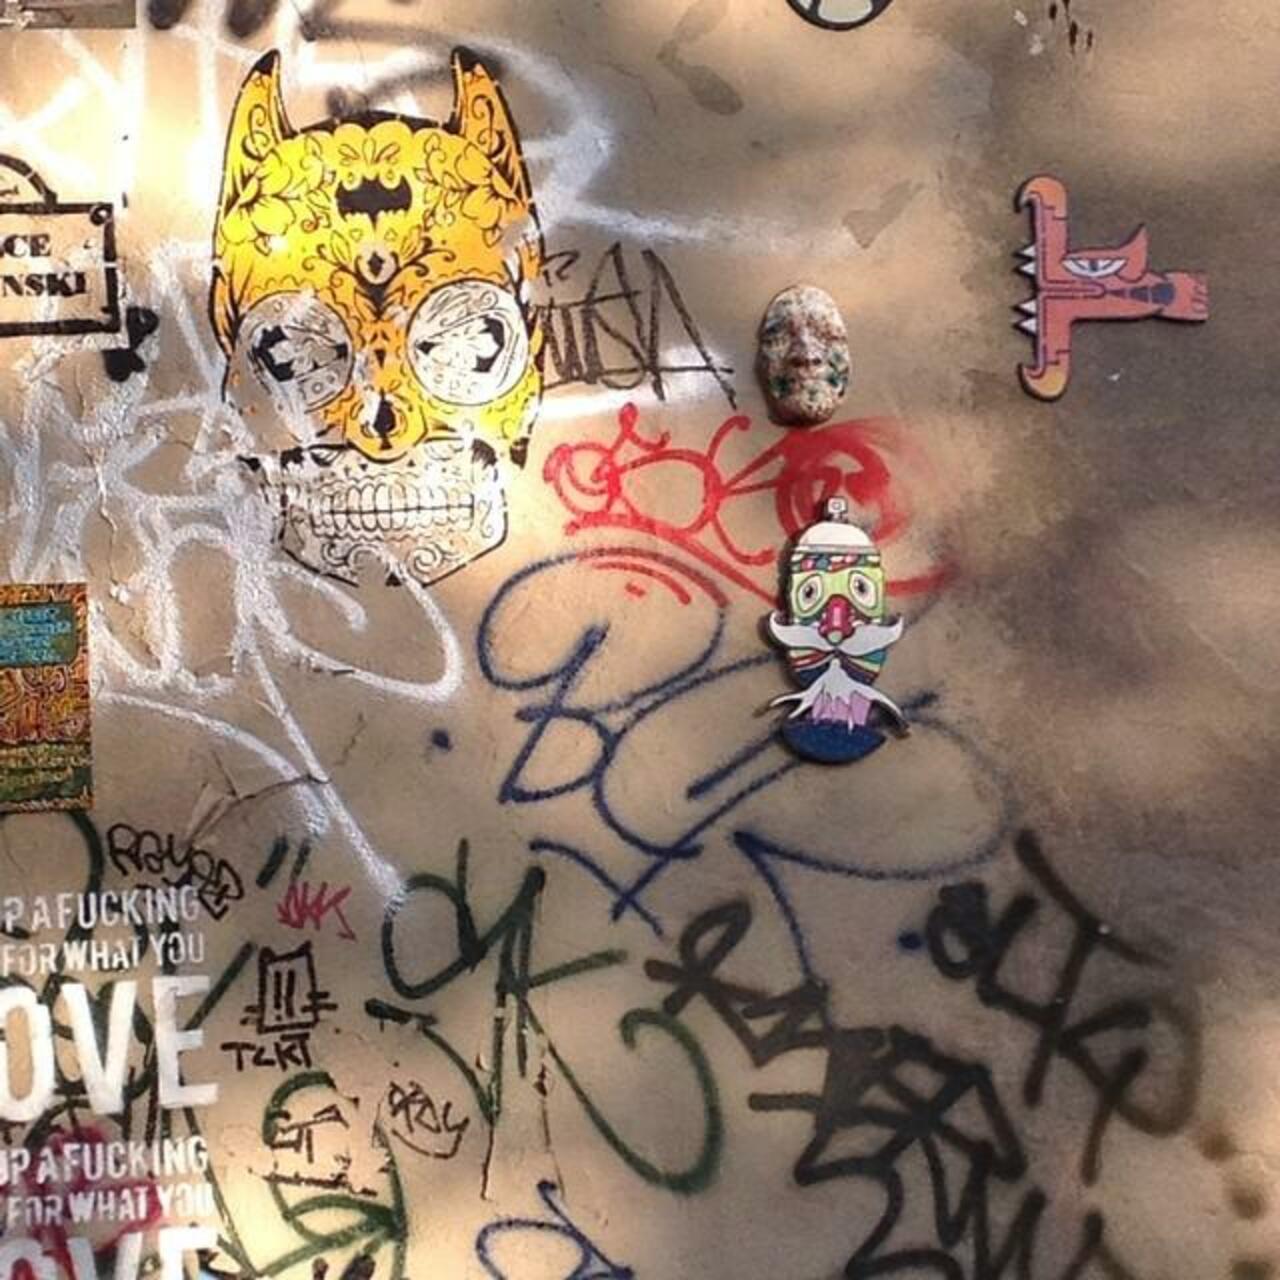 " MASKANS CAN ON THE ROAD#3 PARIS MODE "
#streetart #street #totems #urbanart #colors #graffitiart #graff #graffiti… http://t.co/hsEAP9H9JU